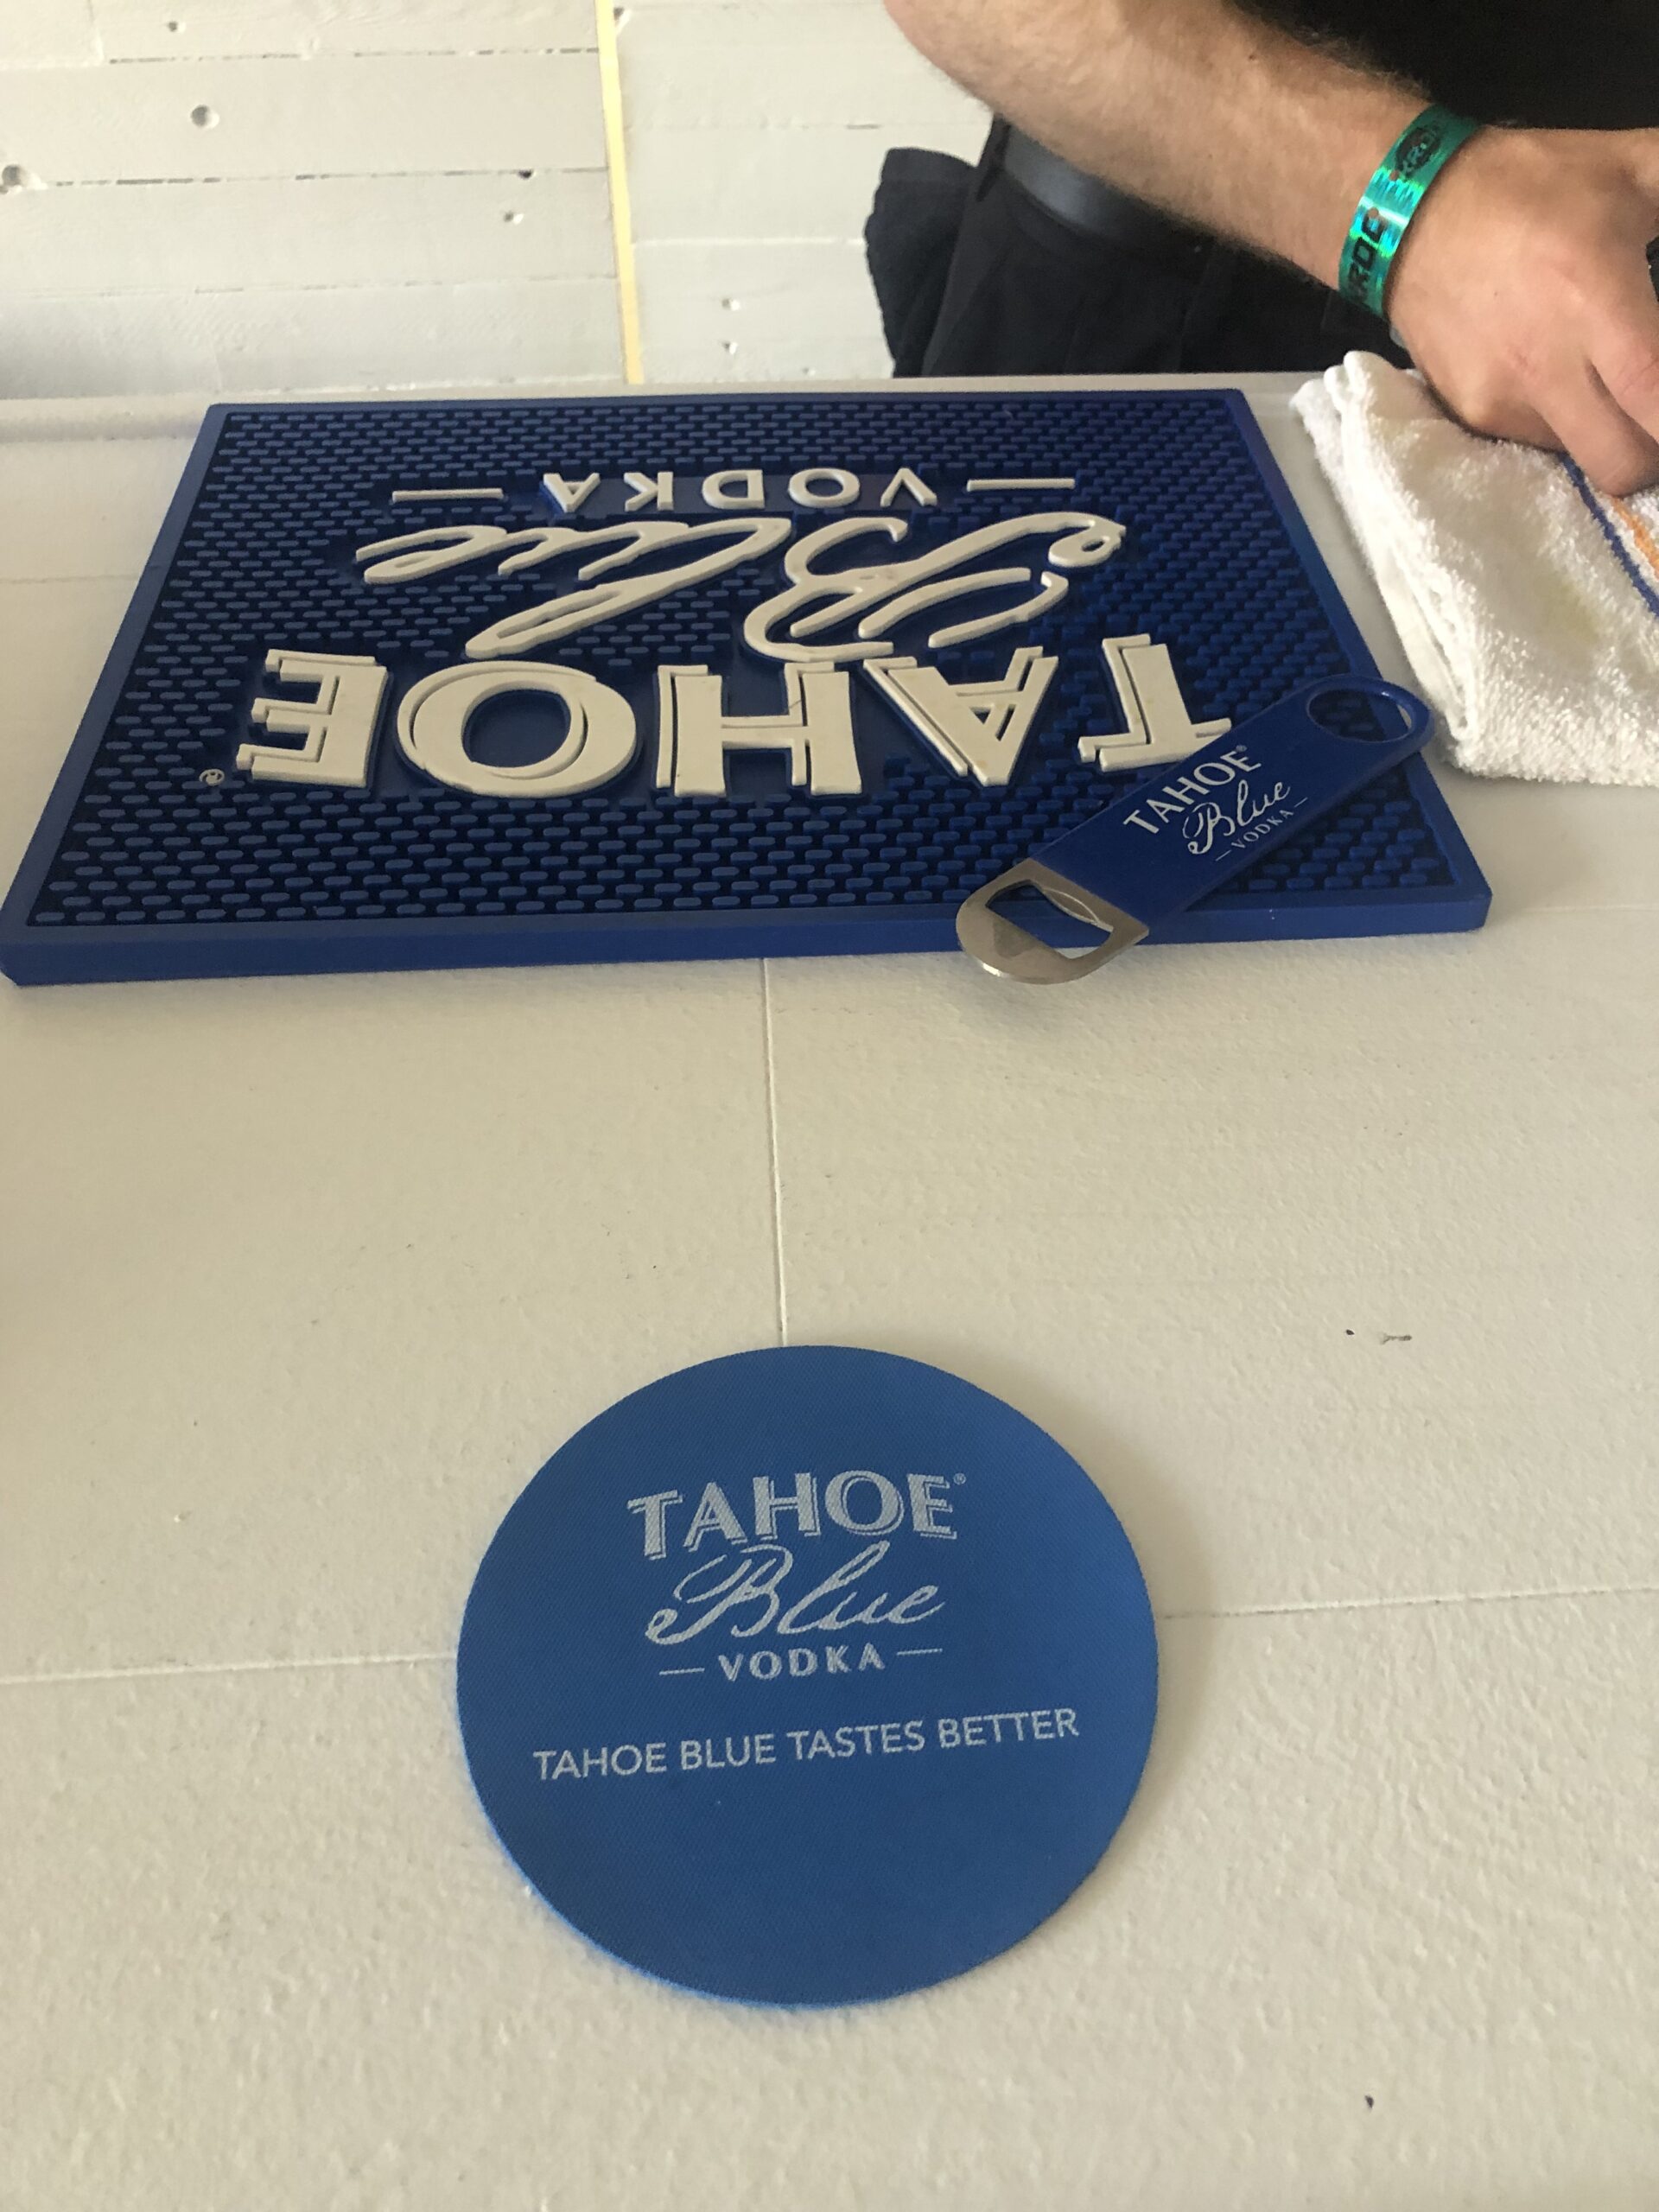 Tahoe Blue Vodka Event img 6034